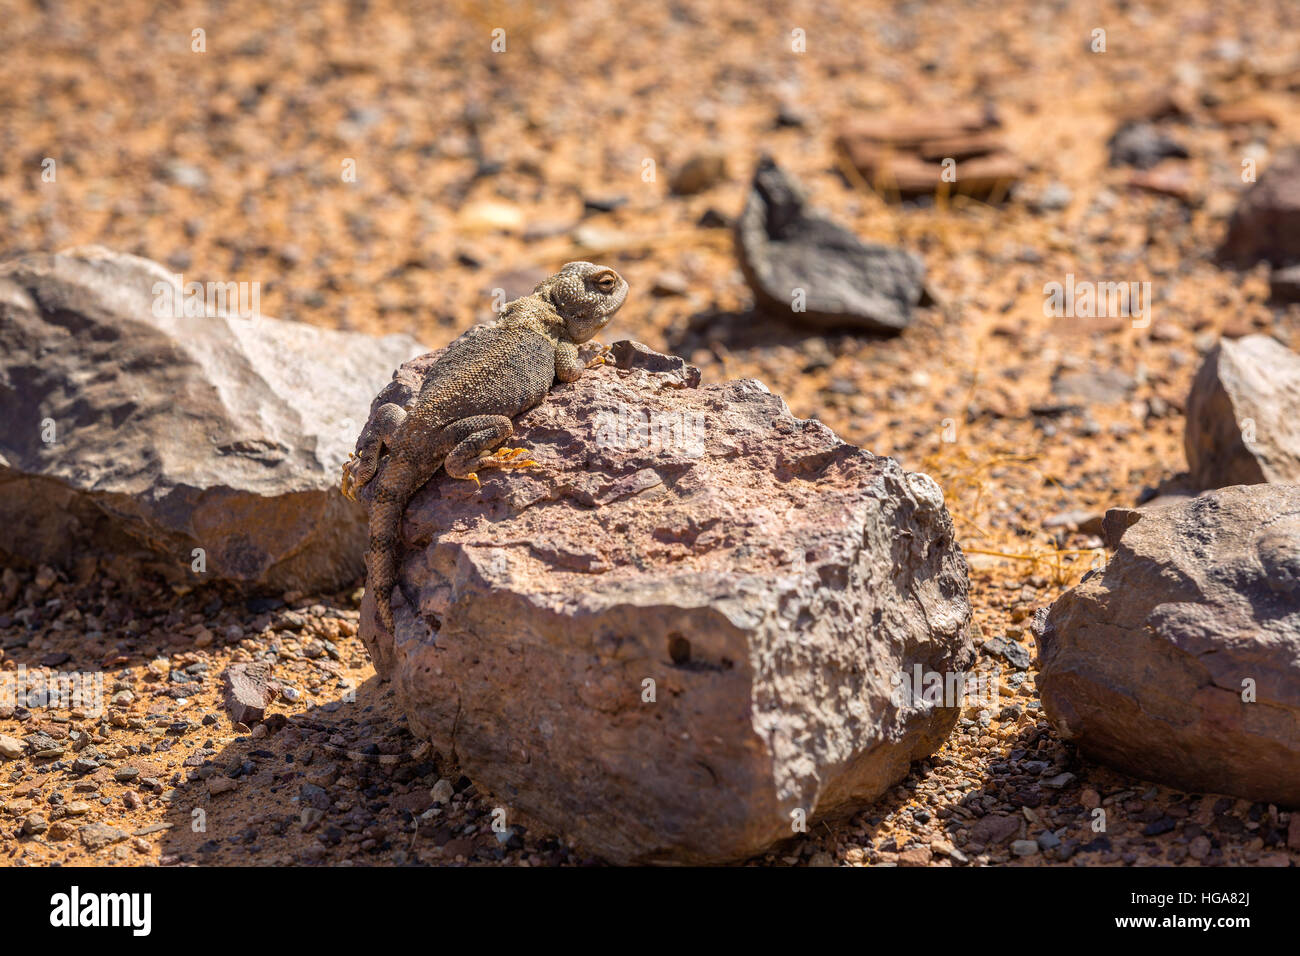 Iguana in the desert Hamada on the southwestern part of the Sahara Desert near Merzouga, Morocco. Stock Photo